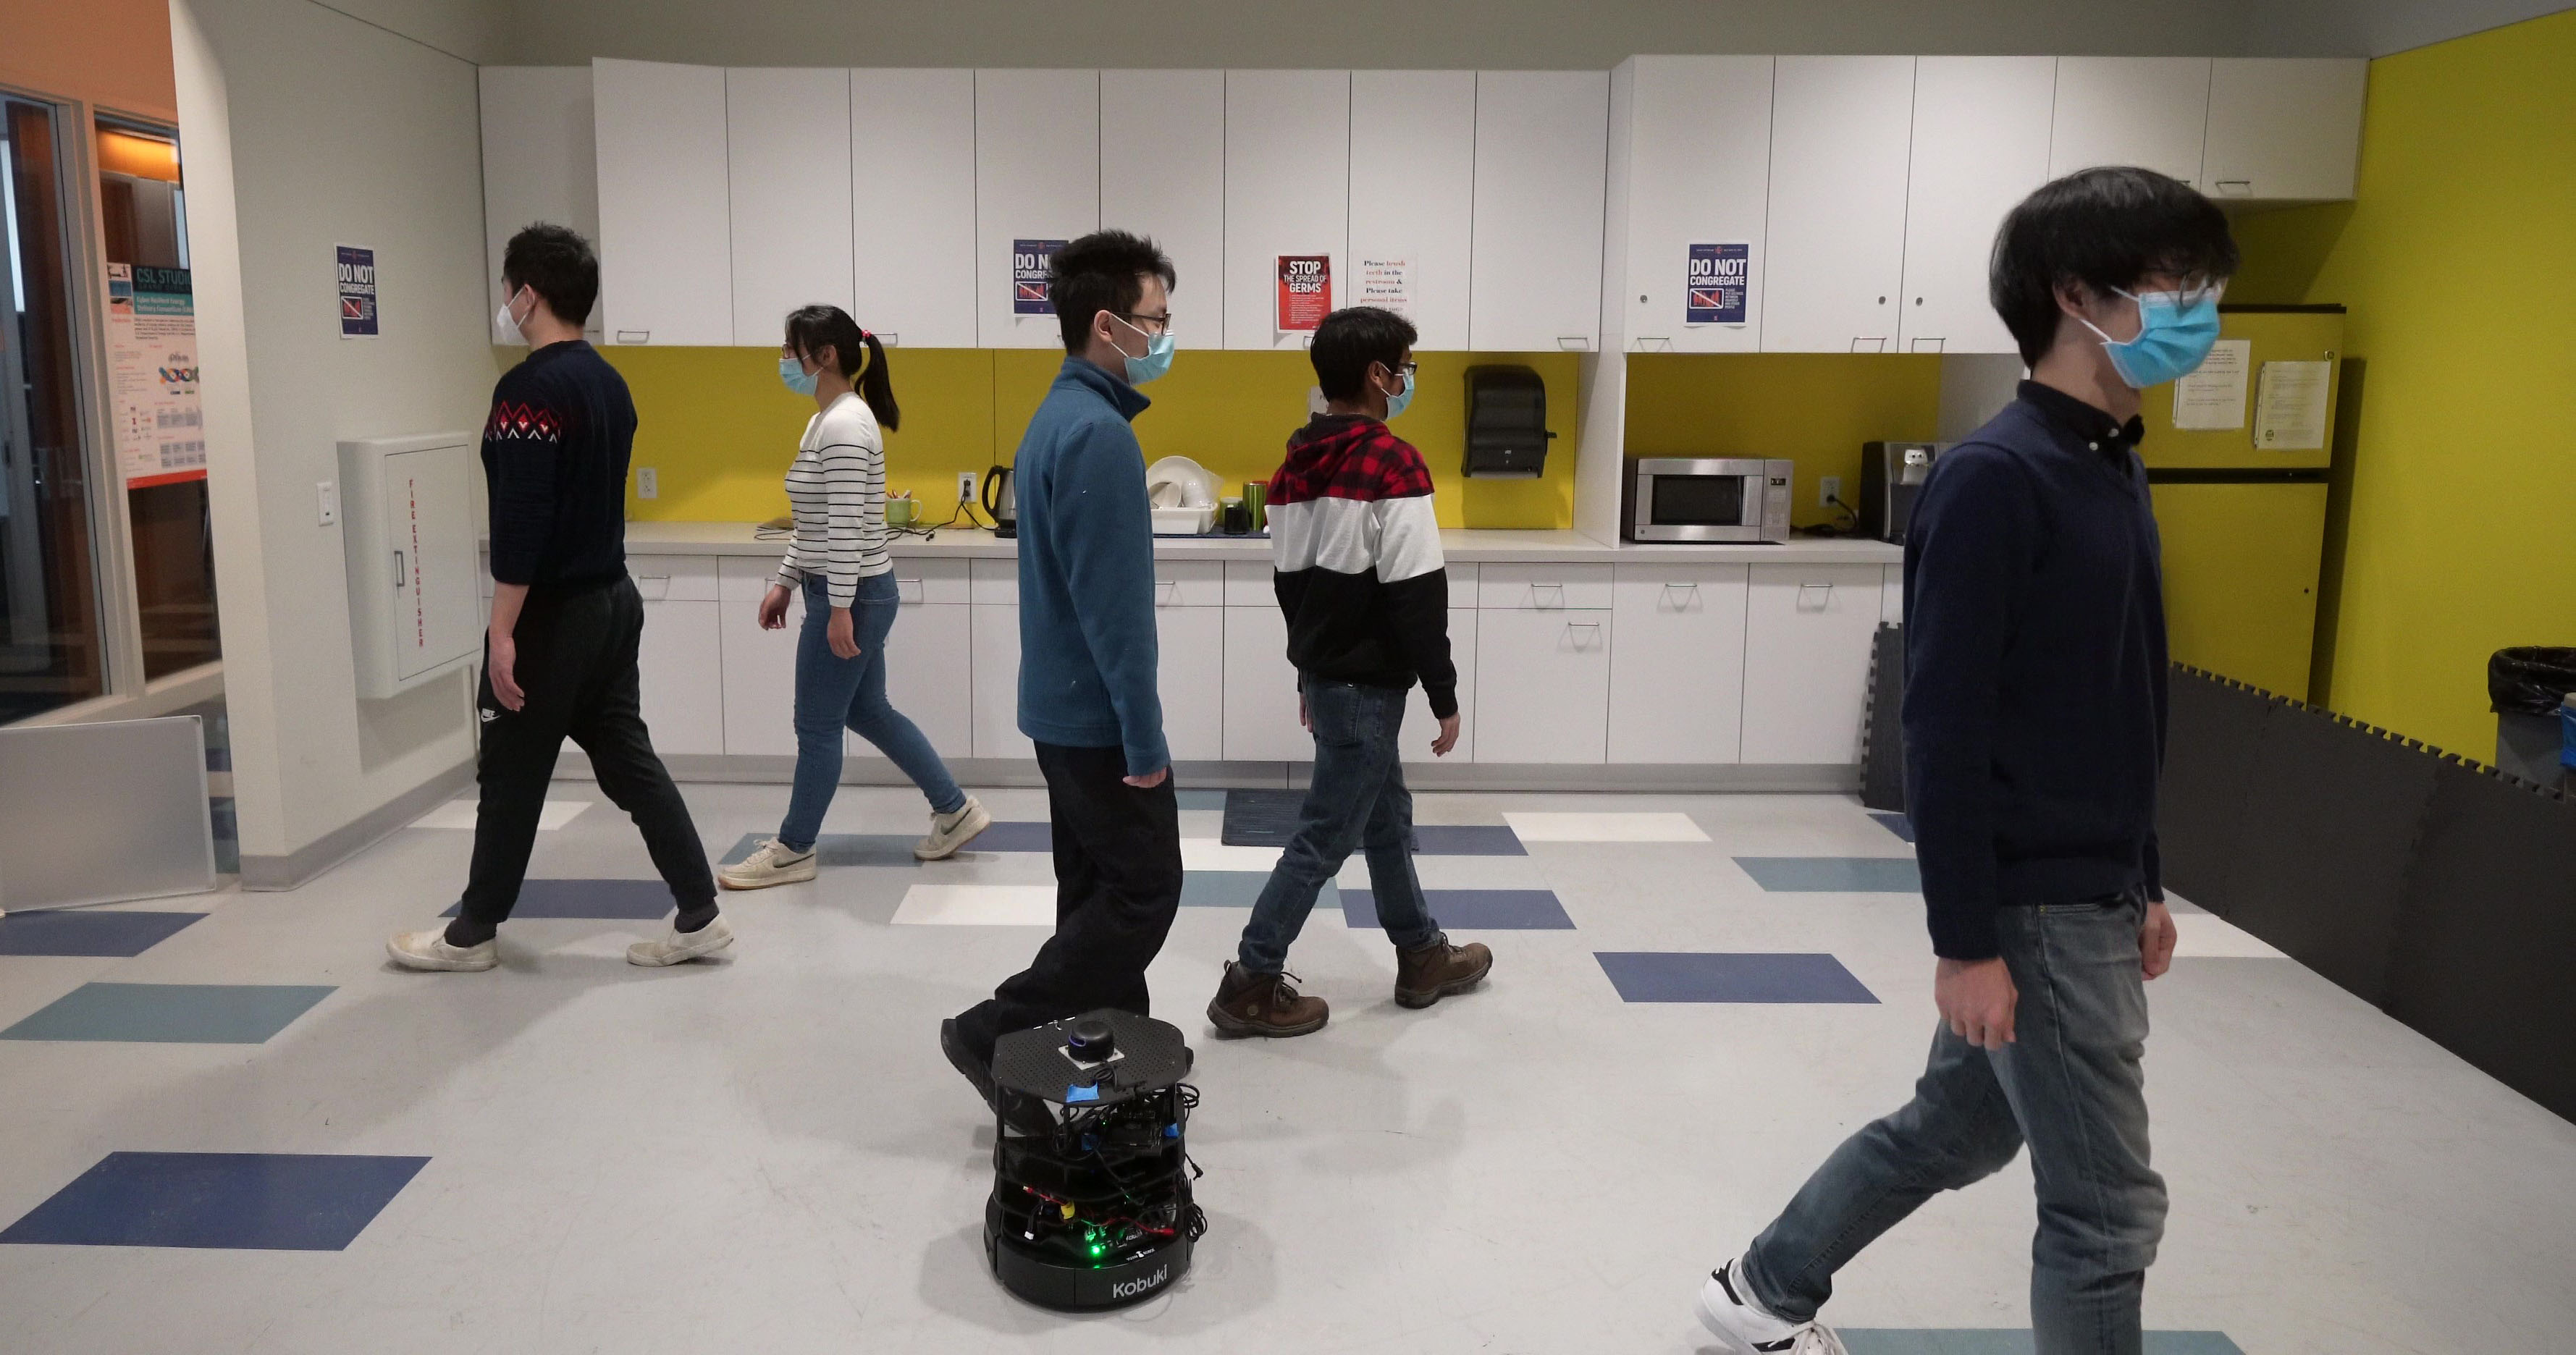 Turtlebot 2i robot navigating real crowd